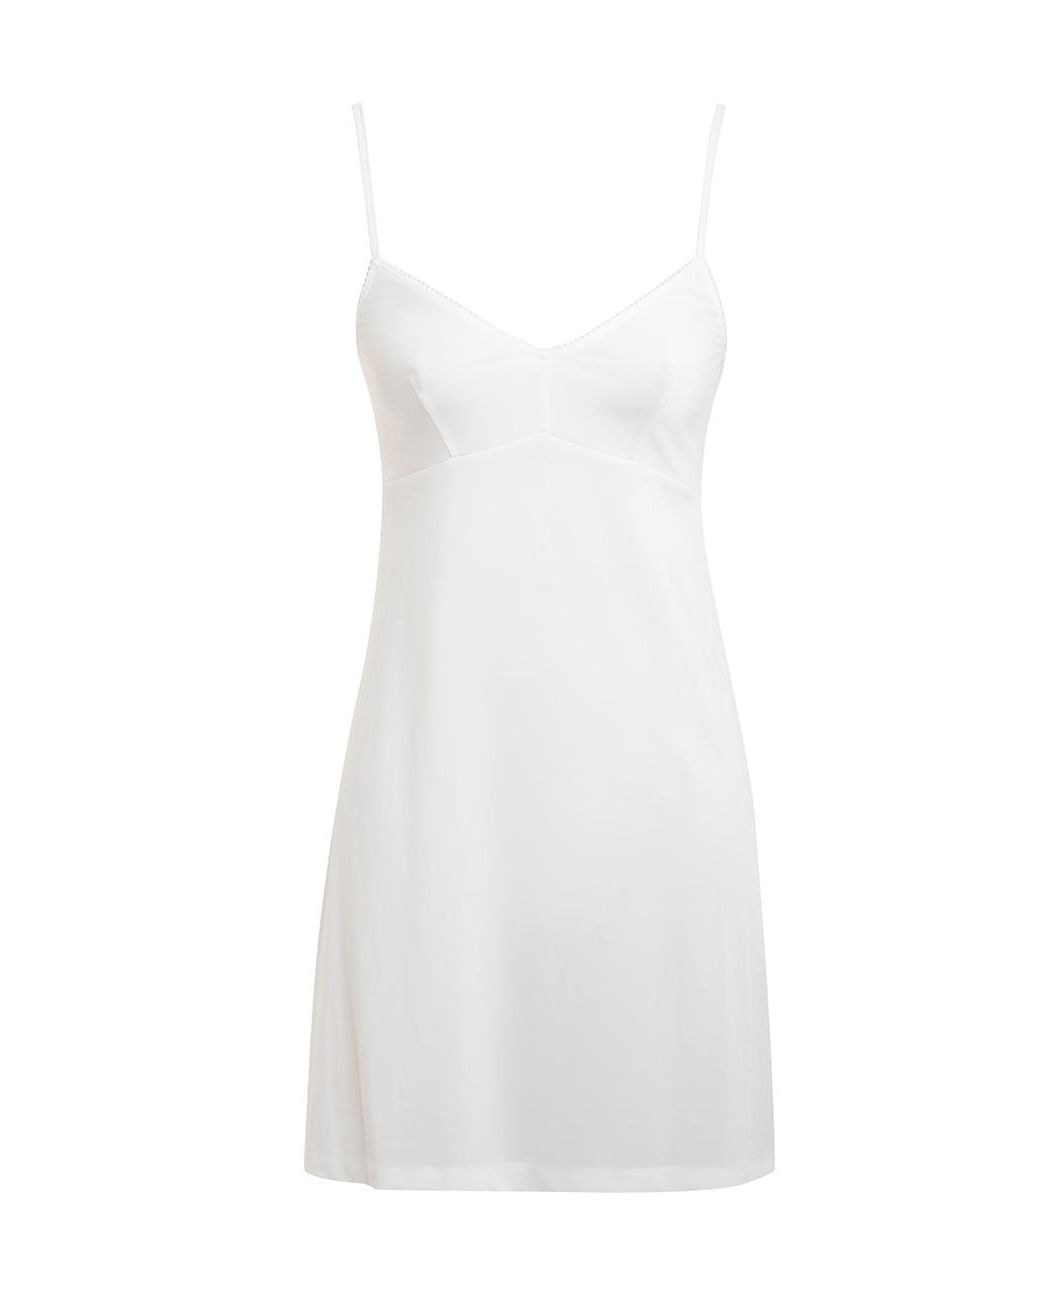 Zimmermann Rhythmic Applique Lace Dress in Ivory (White) | Lyst